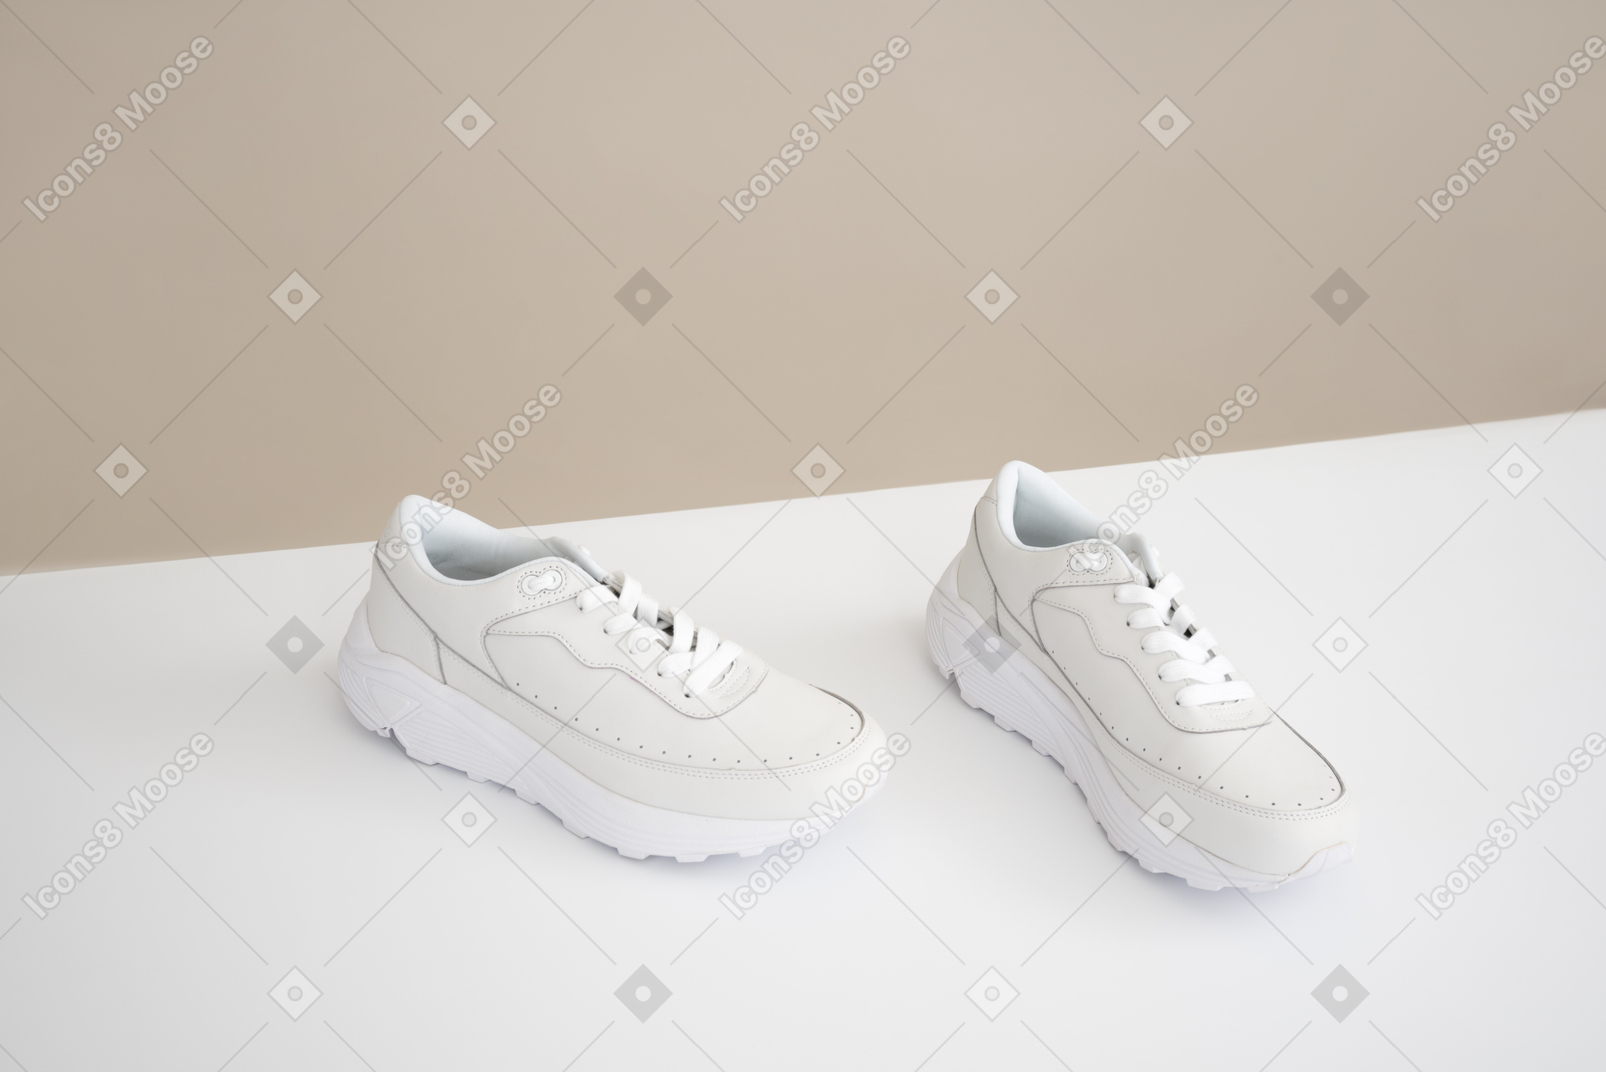 Cool white men's sneakers